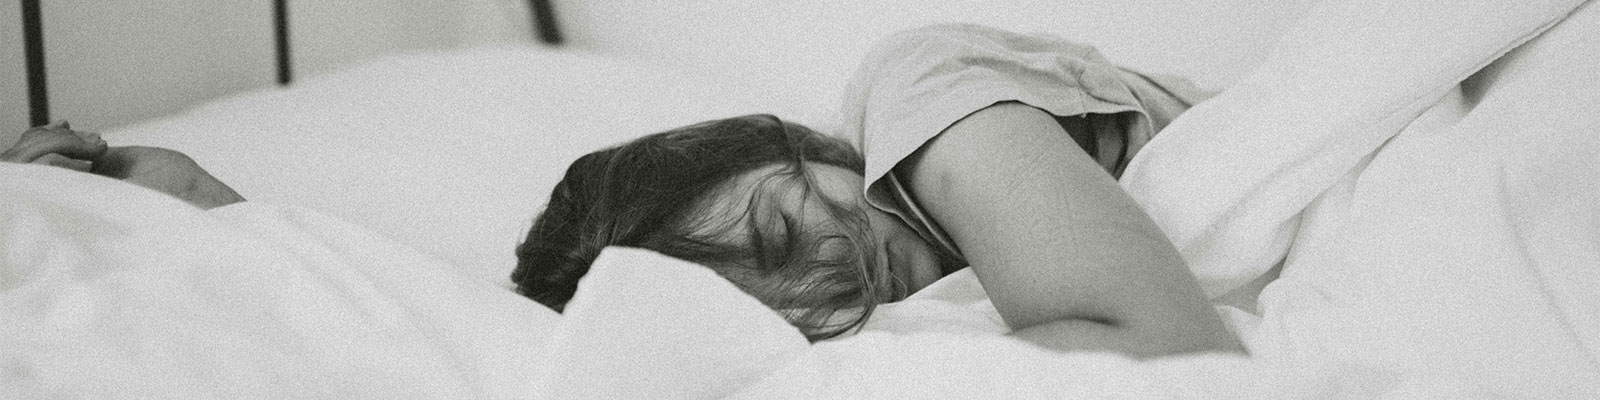 Does GERD Cause Sleep Apnea? Exploring the Connection Between GERD and Sleep Apnea